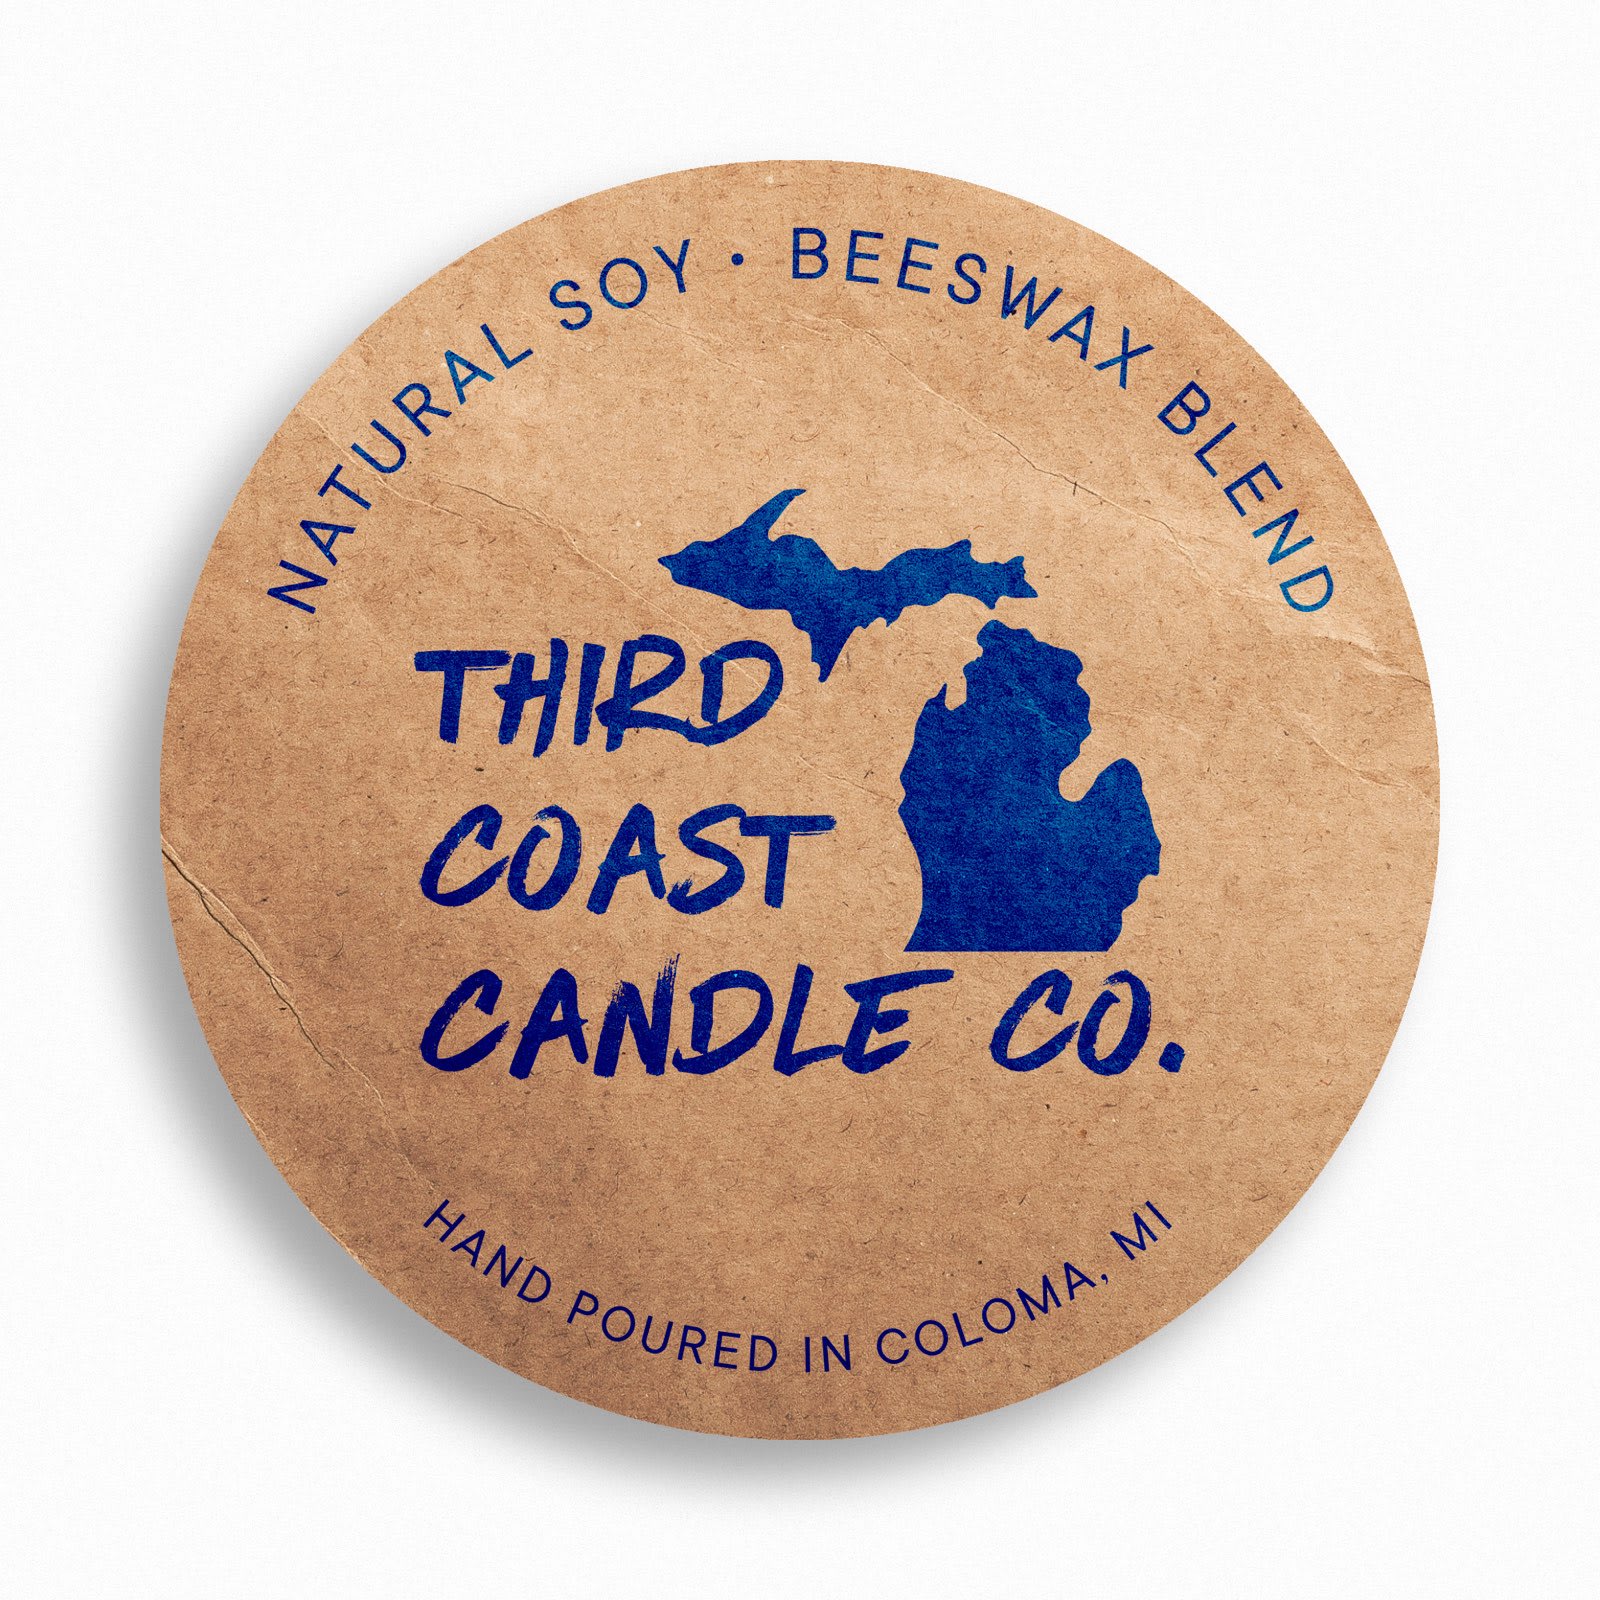 Third Coast Candle Co.